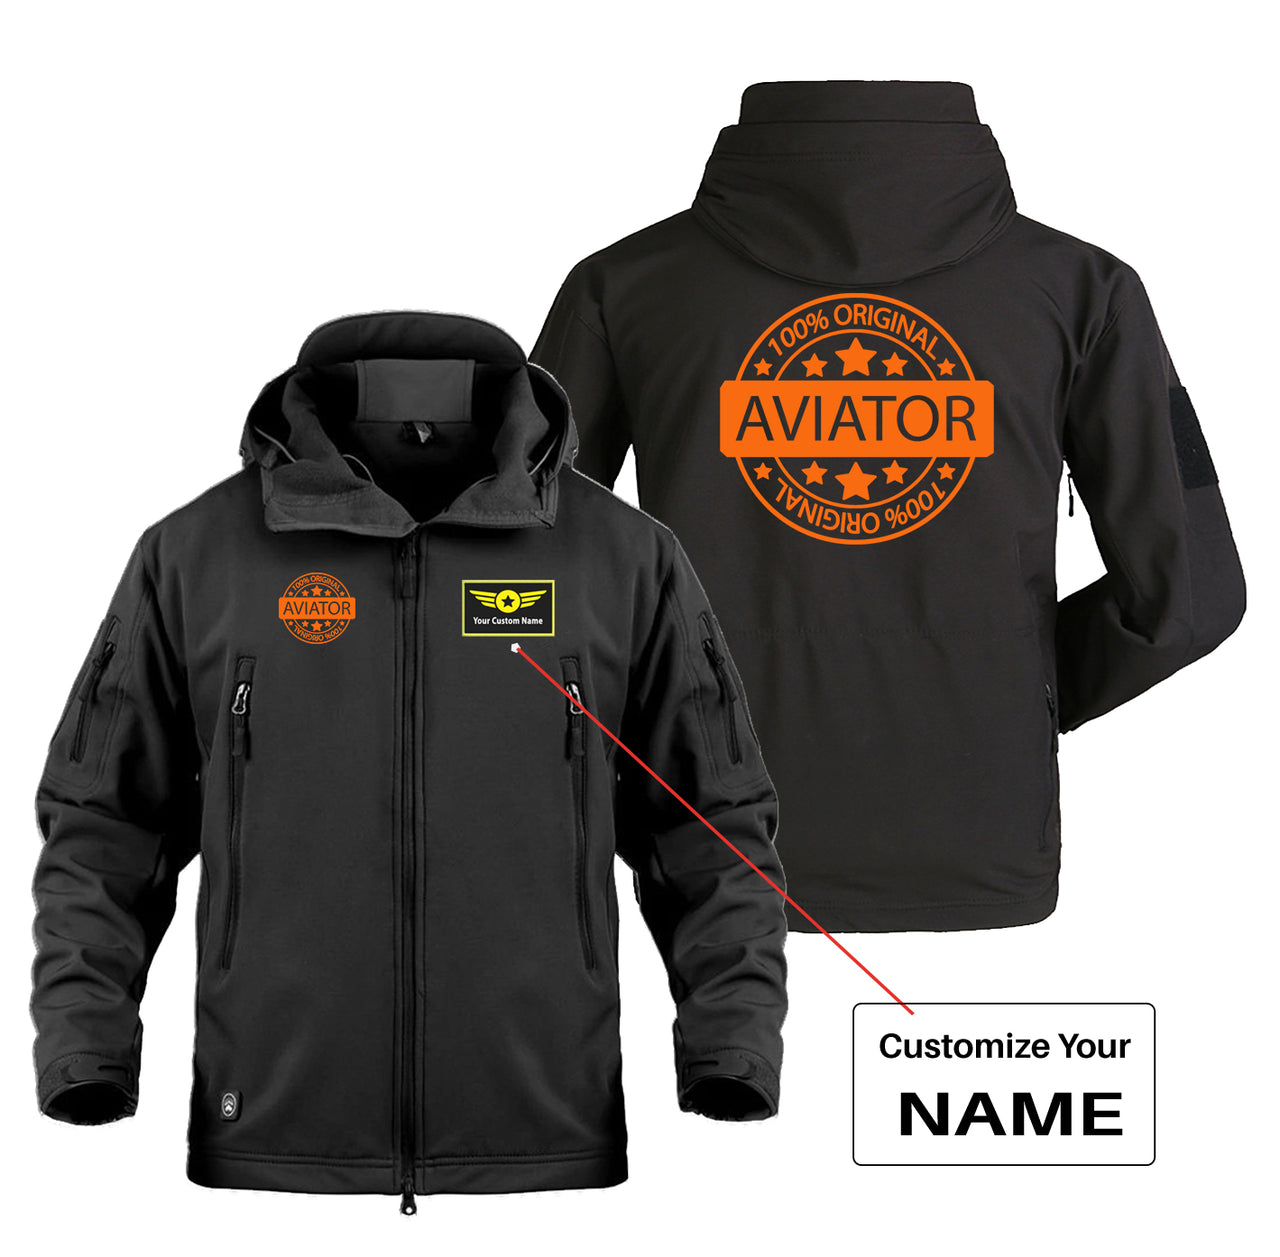 100 Original Aviator Designed Military Jackets (Customizable)